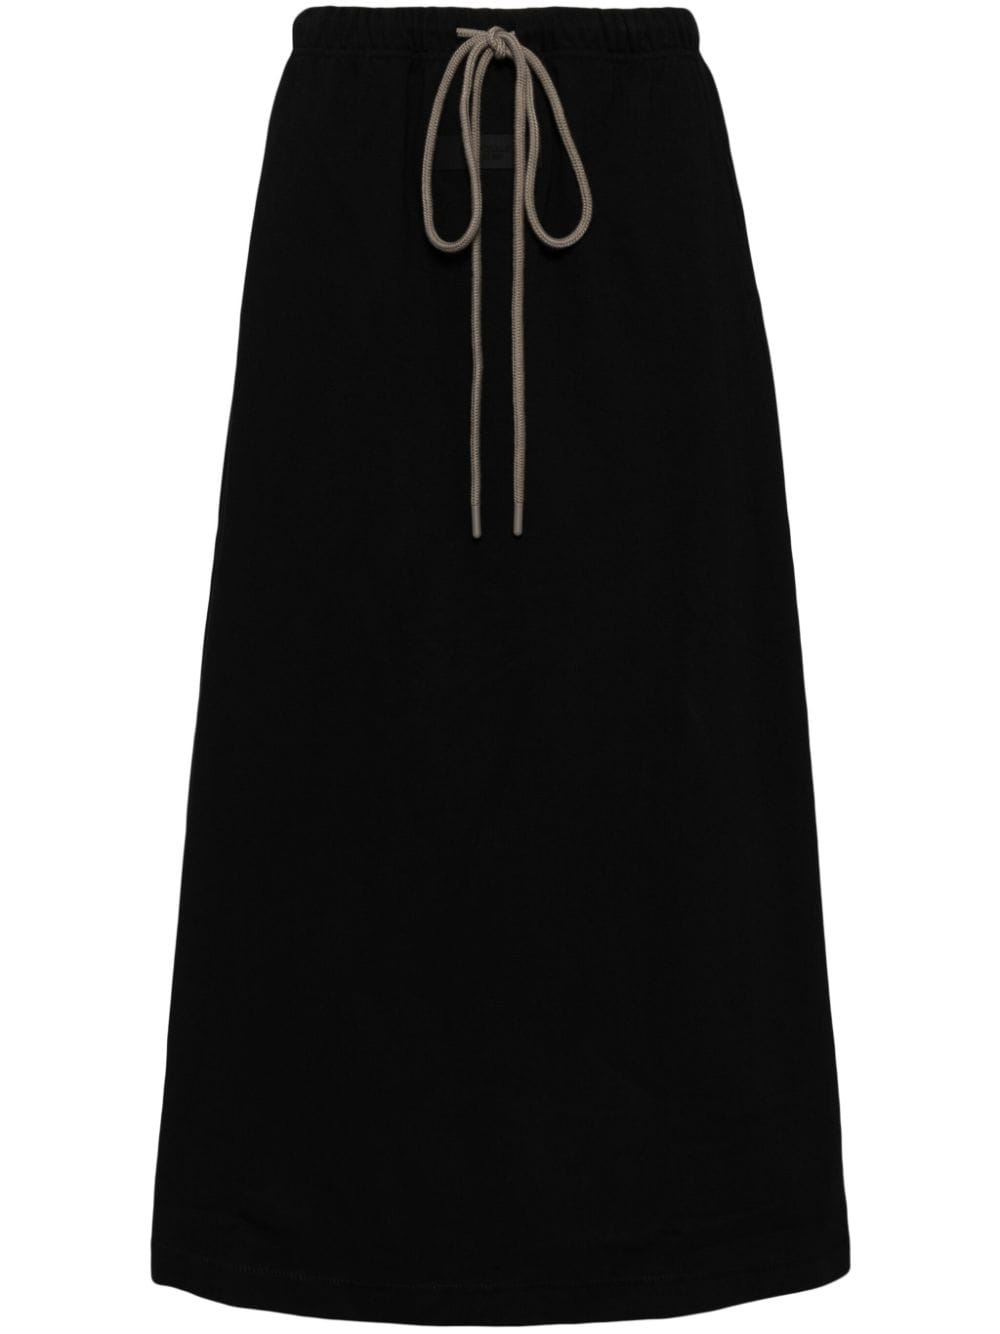 FEAR OF GOD ESSENTIALS Essentials jersey A-line skirt - Black von FEAR OF GOD ESSENTIALS